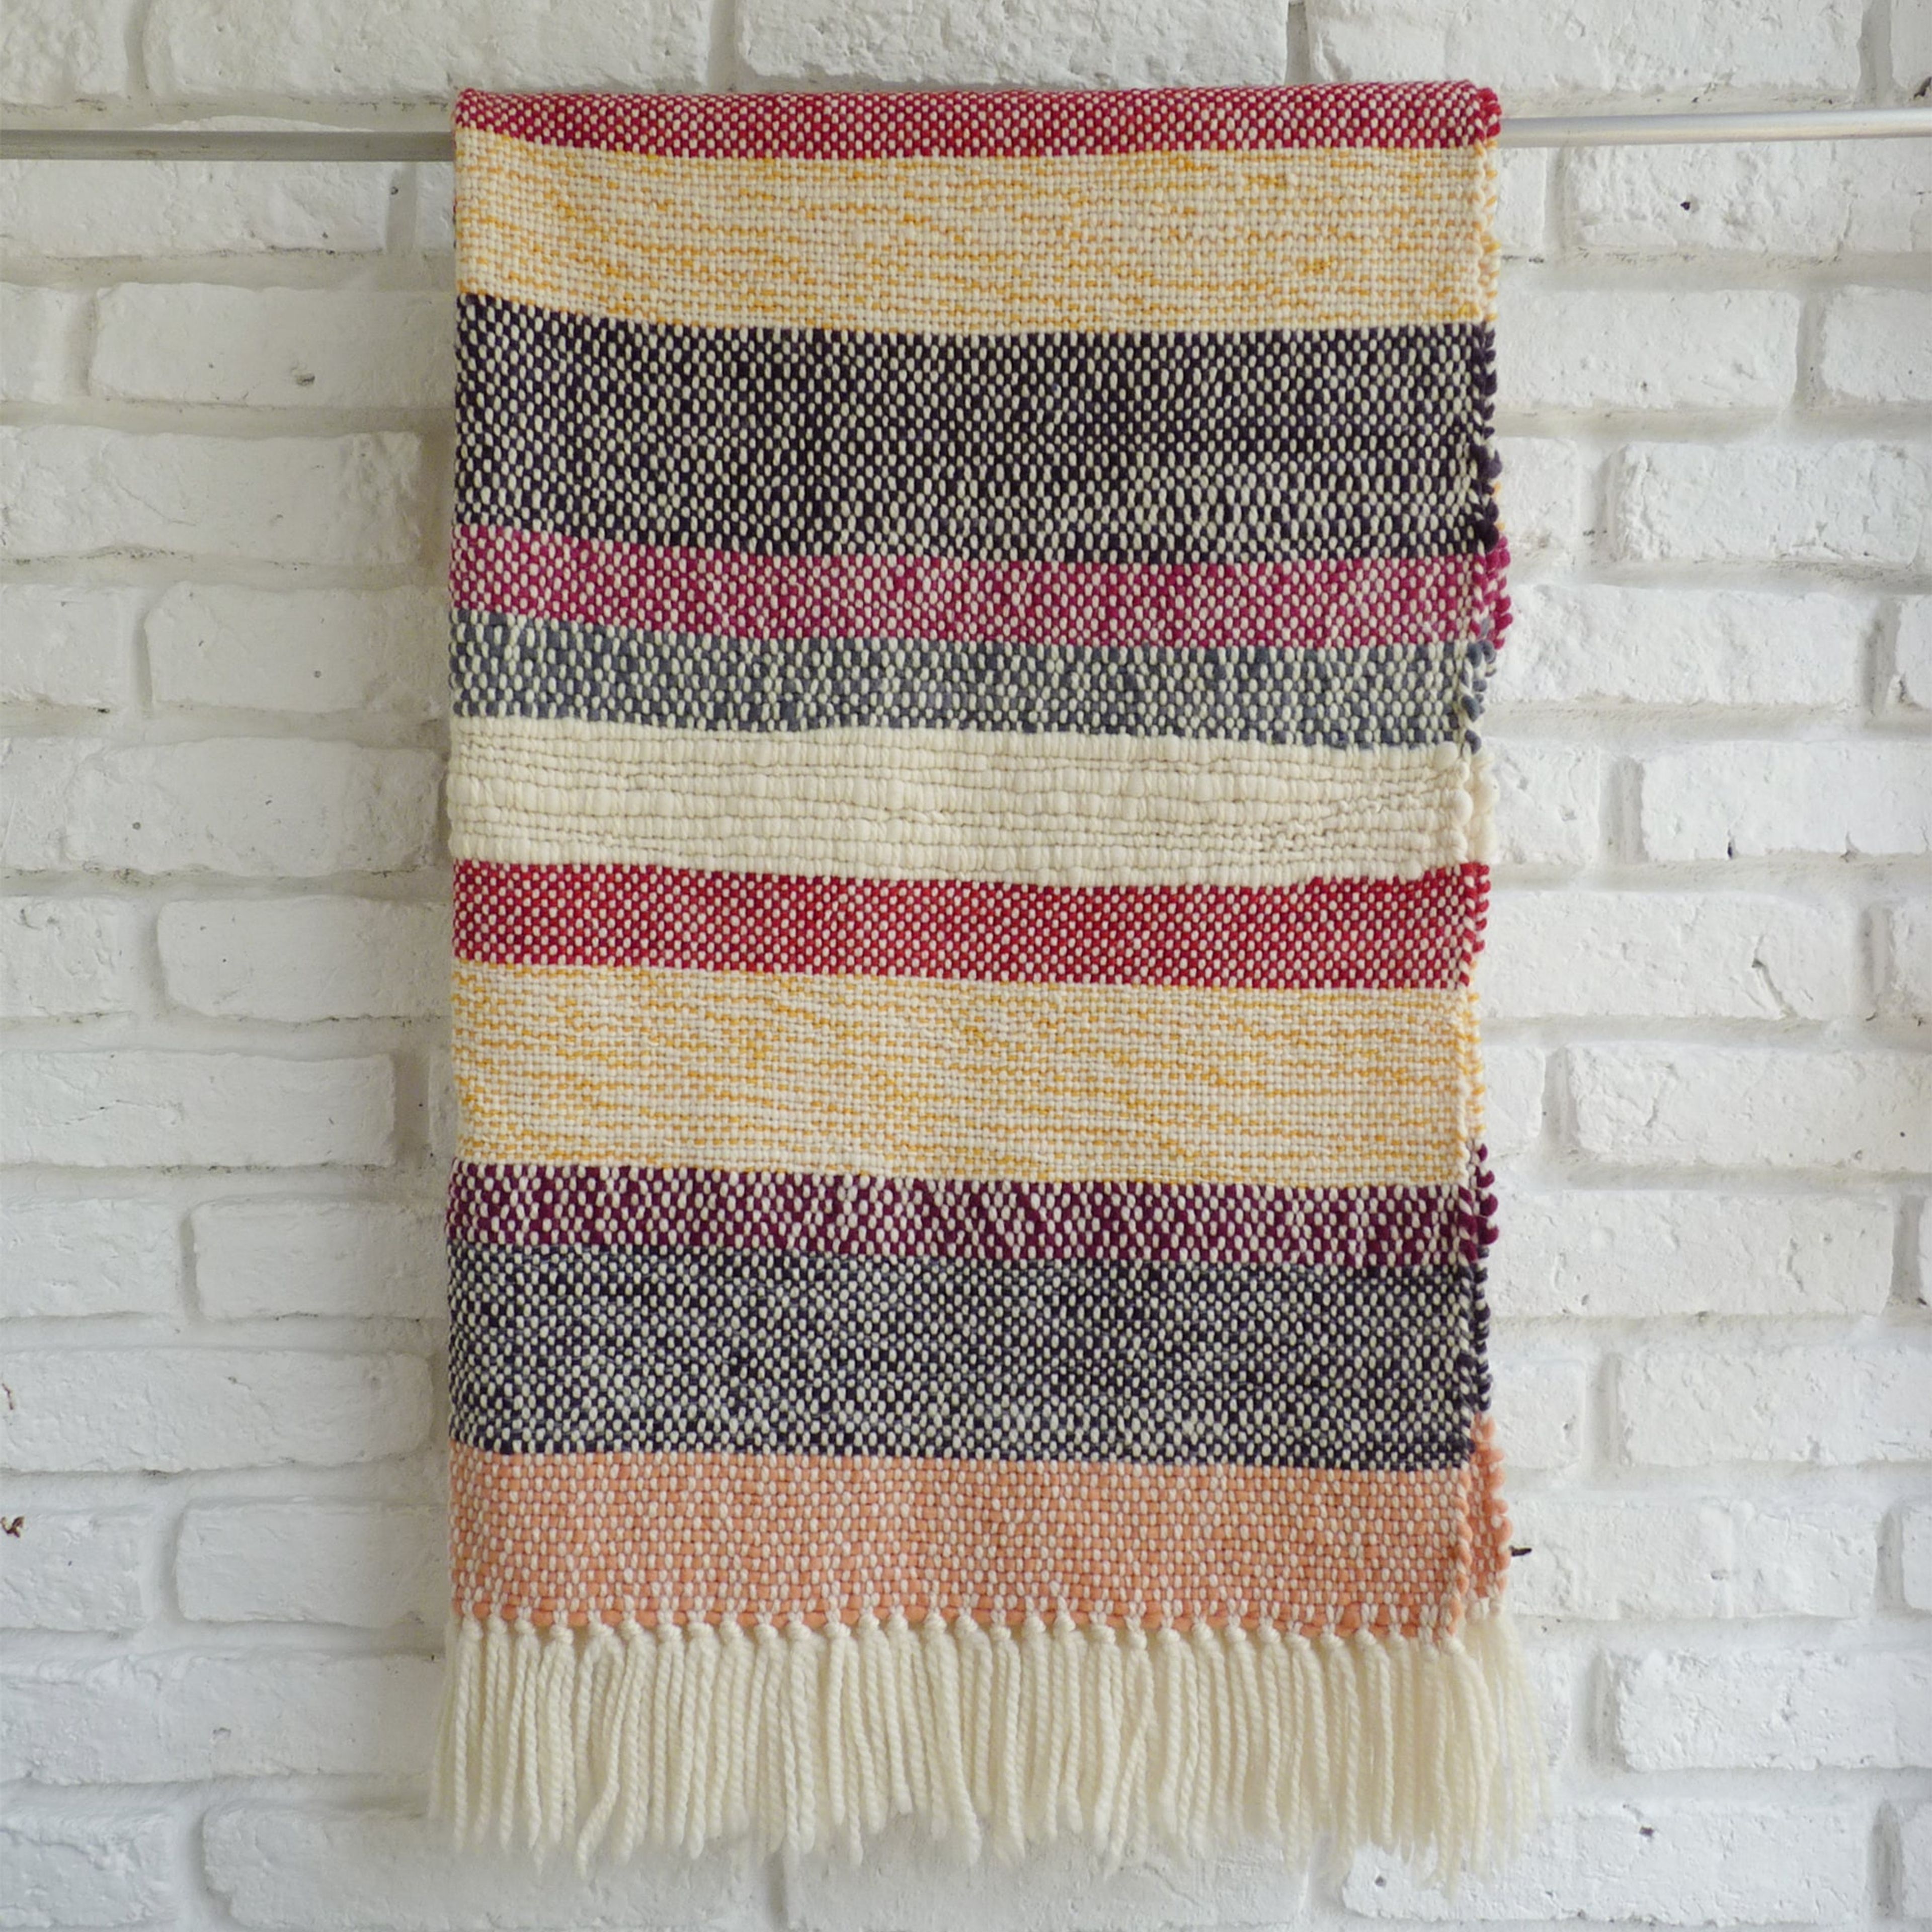 Rainbow Unique Blanket - Handmade Merino Wool Throw - Add Colorful Comfort to Your Home Decor